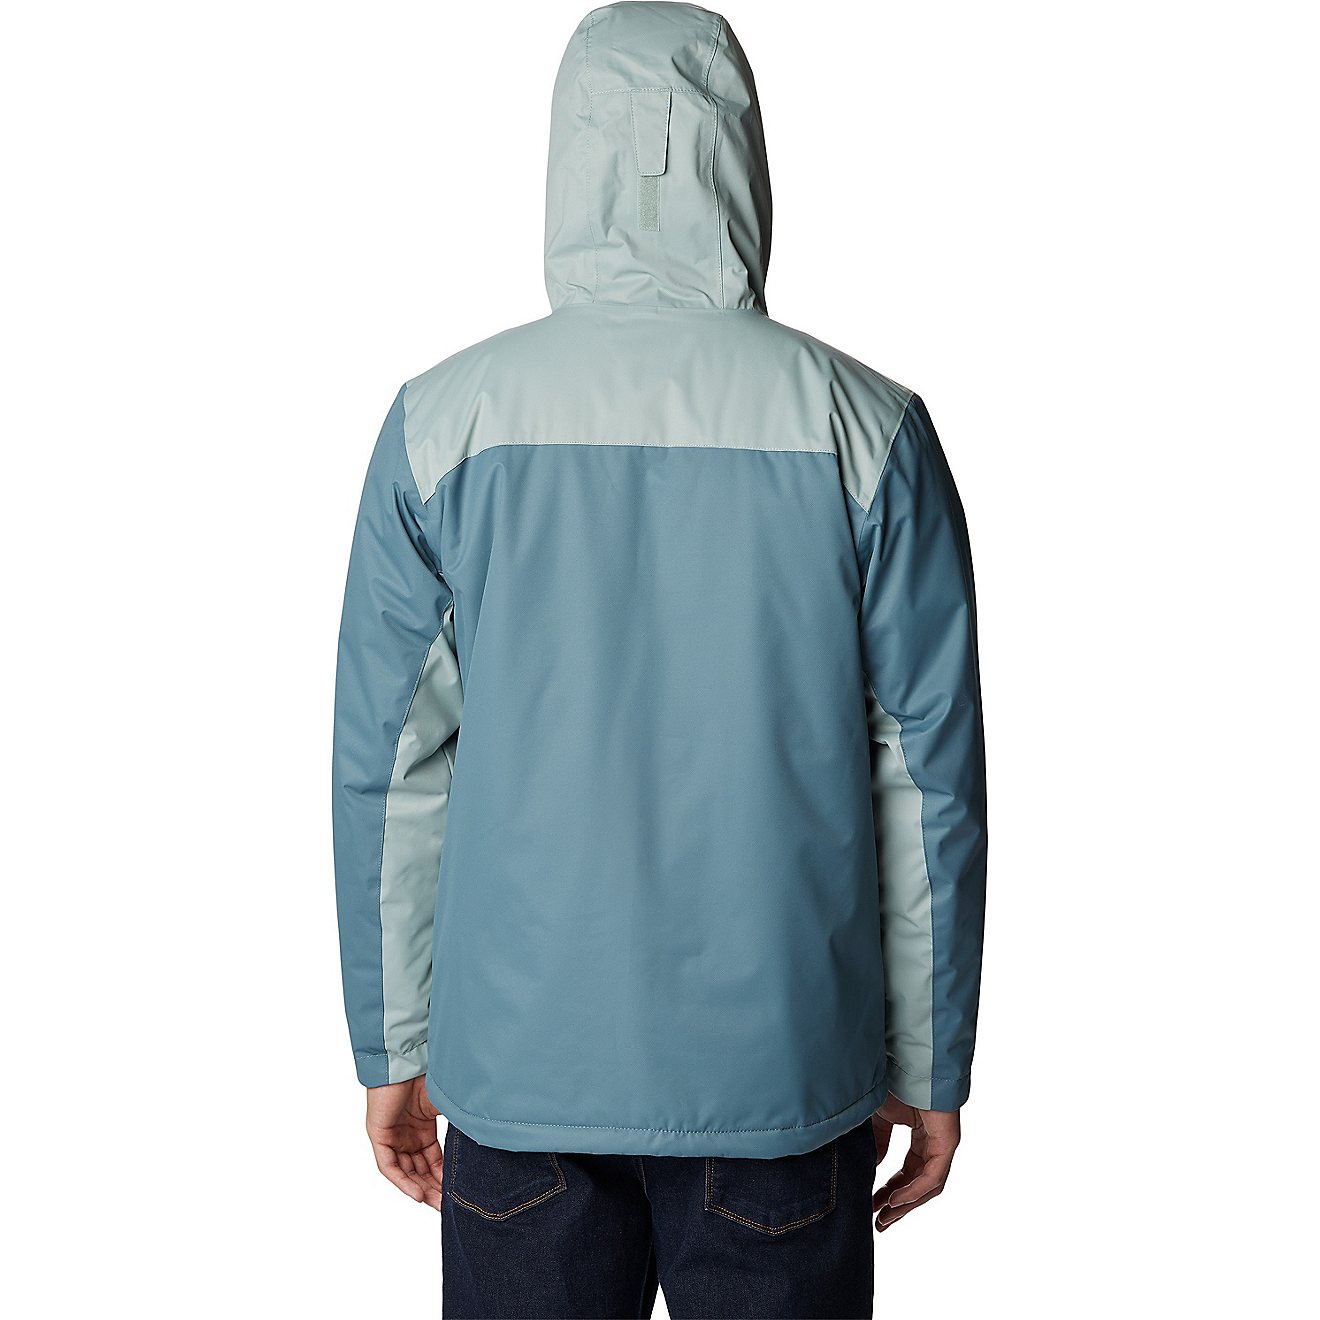 Columbia Sportswear Men's Tipton Peak II Insulated Jacket | Academy